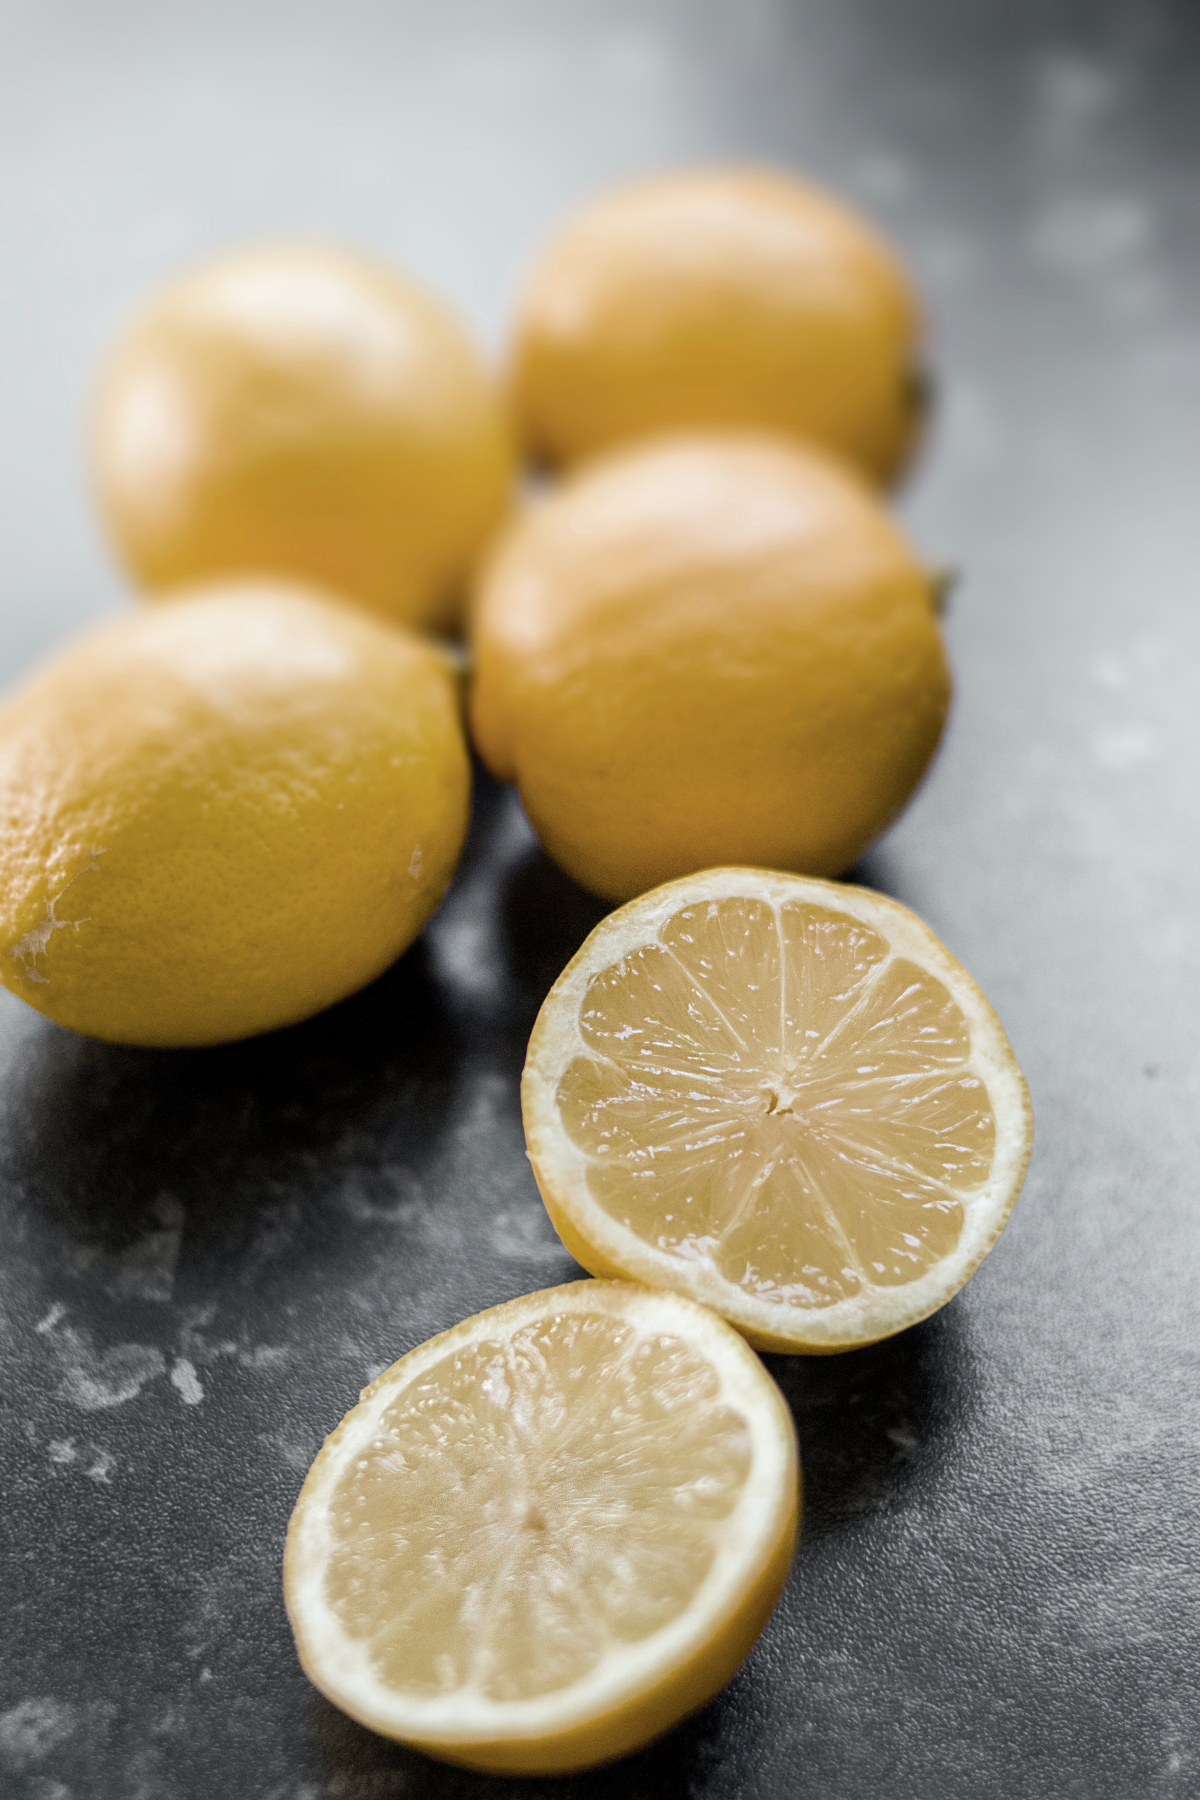 quartz cleaner lemon and cut lemon